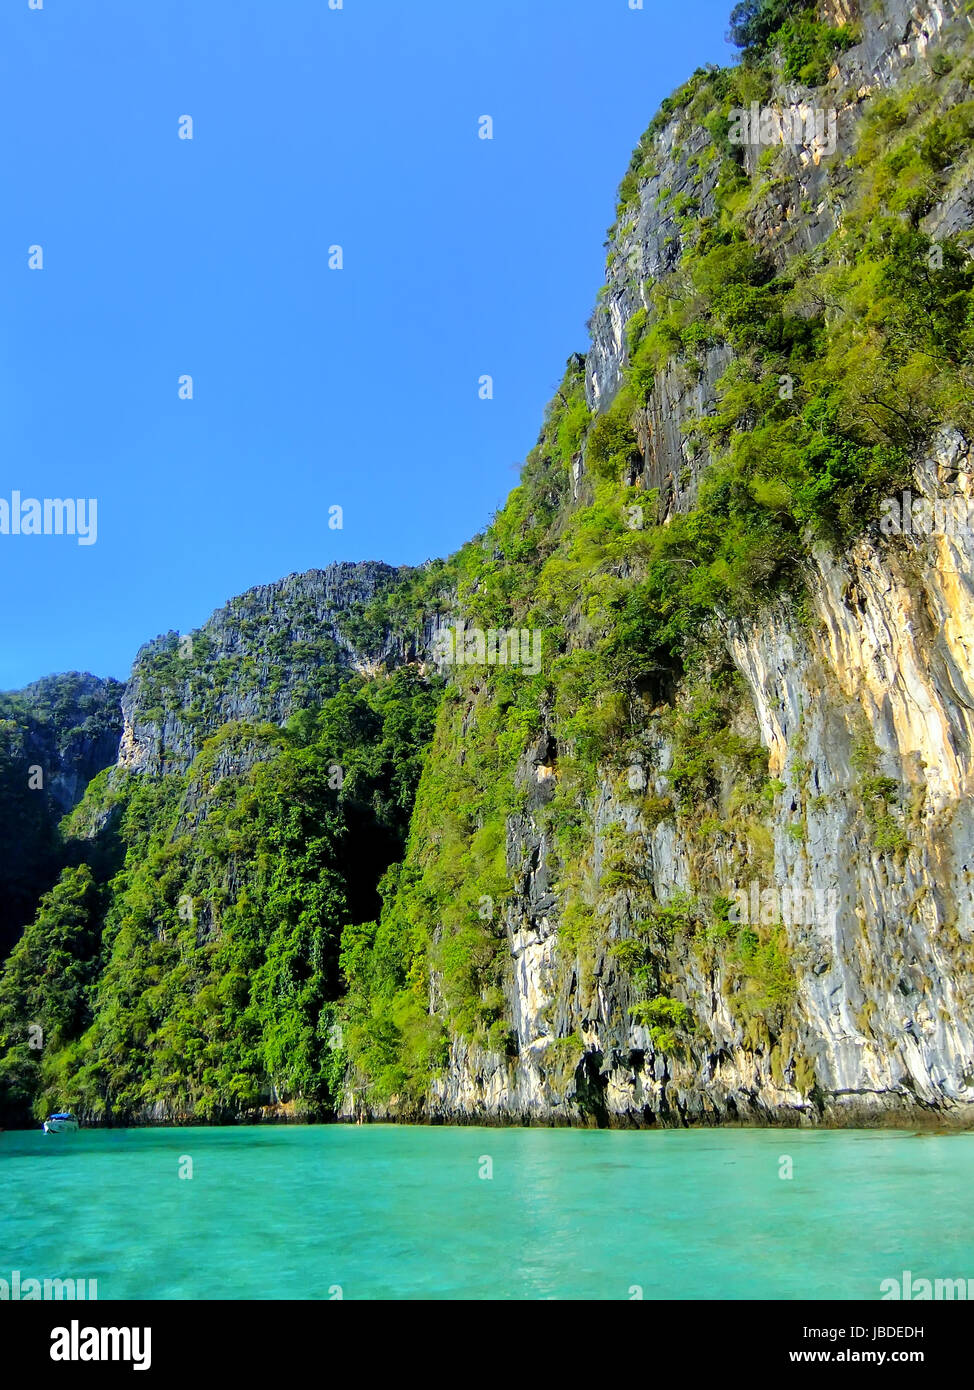 Kalkstein-Klippen der Insel Phi Phi Leh, Provinz Krabi, Thailand. Koh Phi Phi Leh ist Teil des Mu Ko Phi Phi National Park. Stockfoto